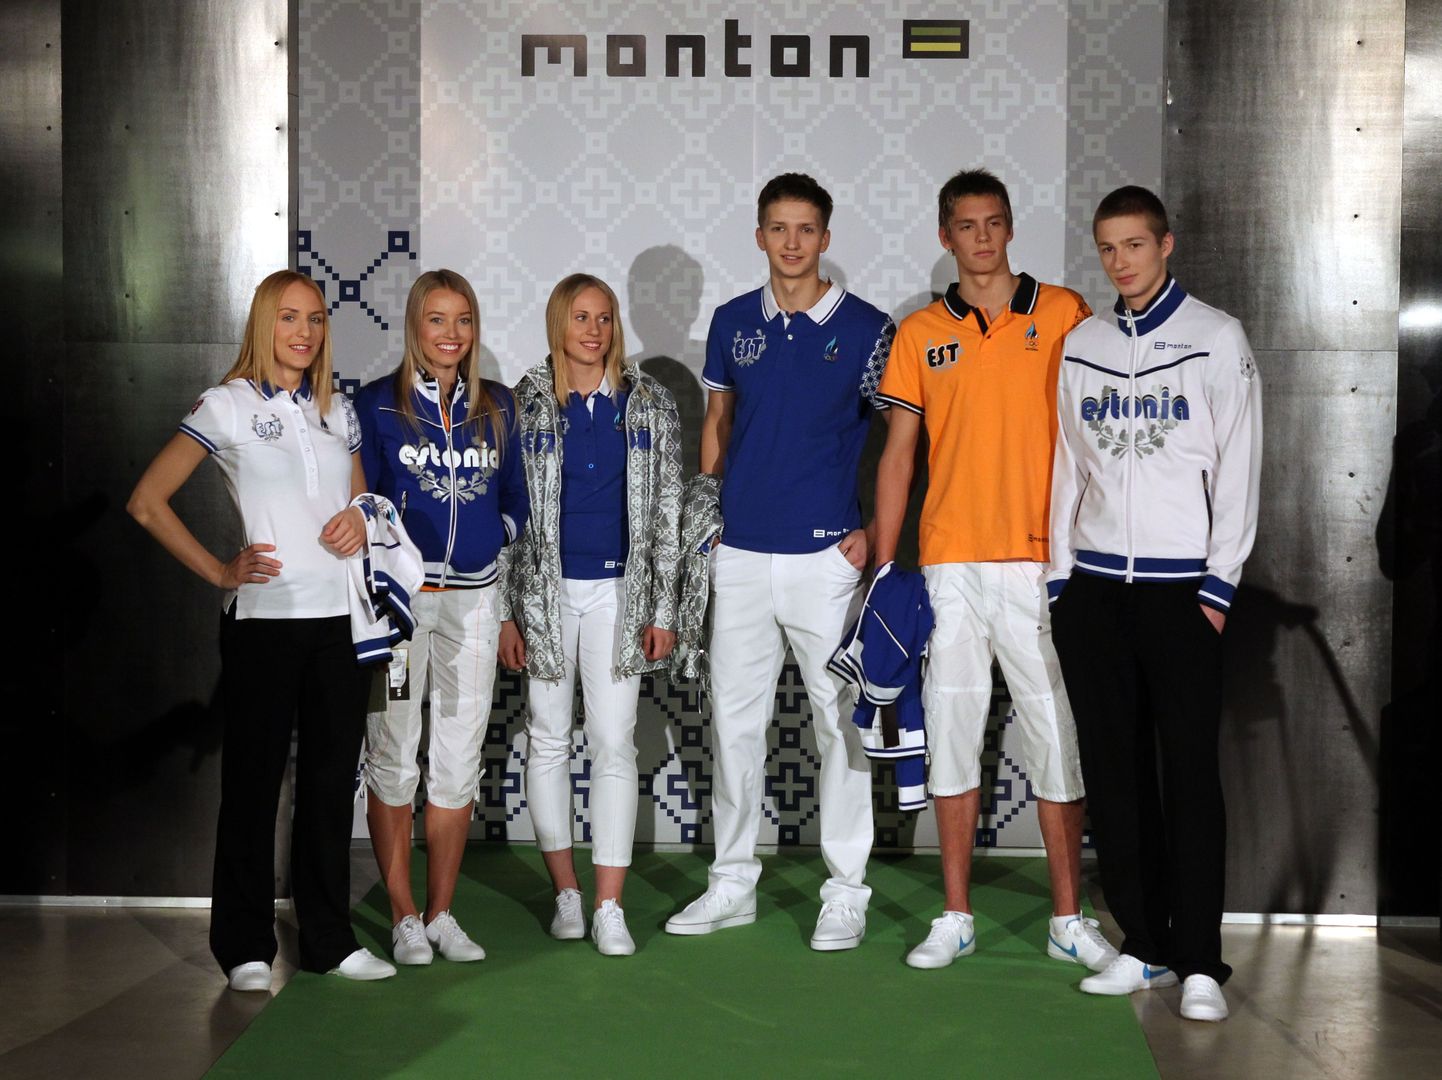 Eesti Olümpiakommitee ja Monton esitlesid Eesti delgatsiooni paraadvormi.